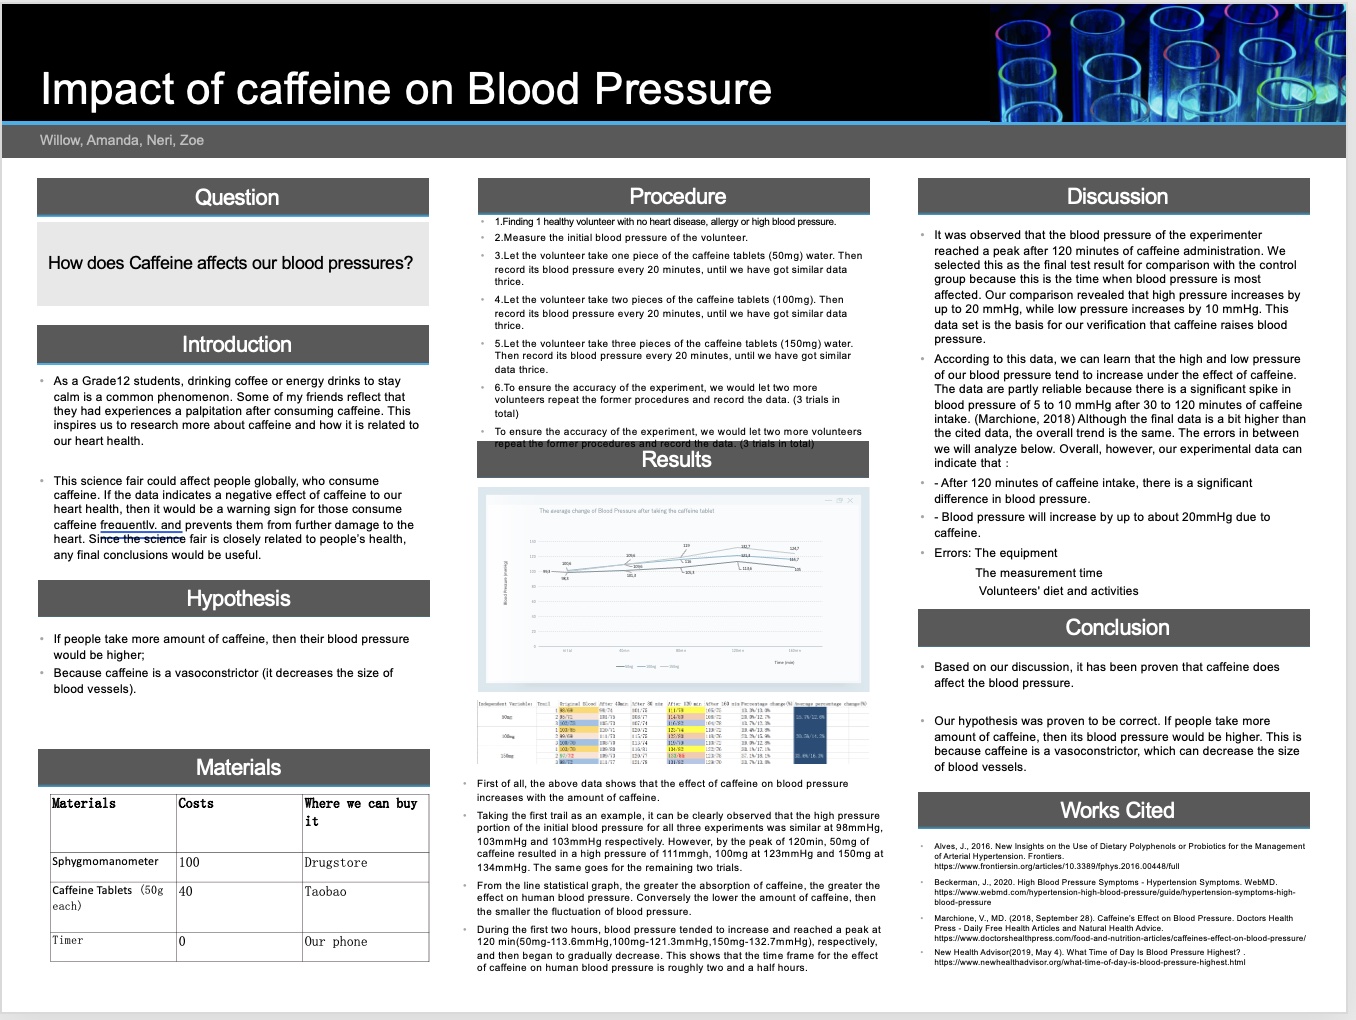 Impact of Caffeine on Blood Pressure